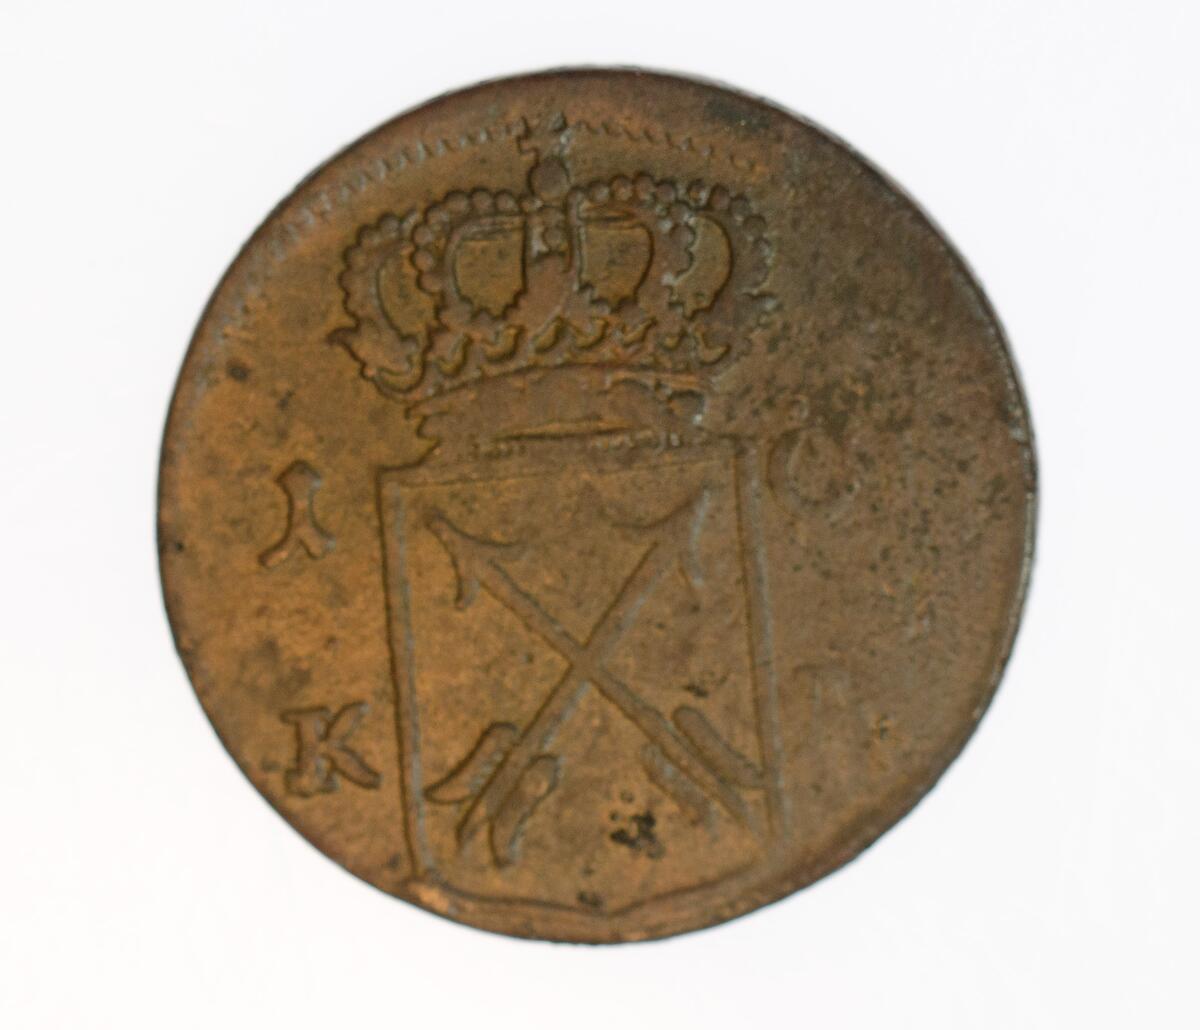 Mynt, 1 öre k.m. från Fredrik I tid, 1726